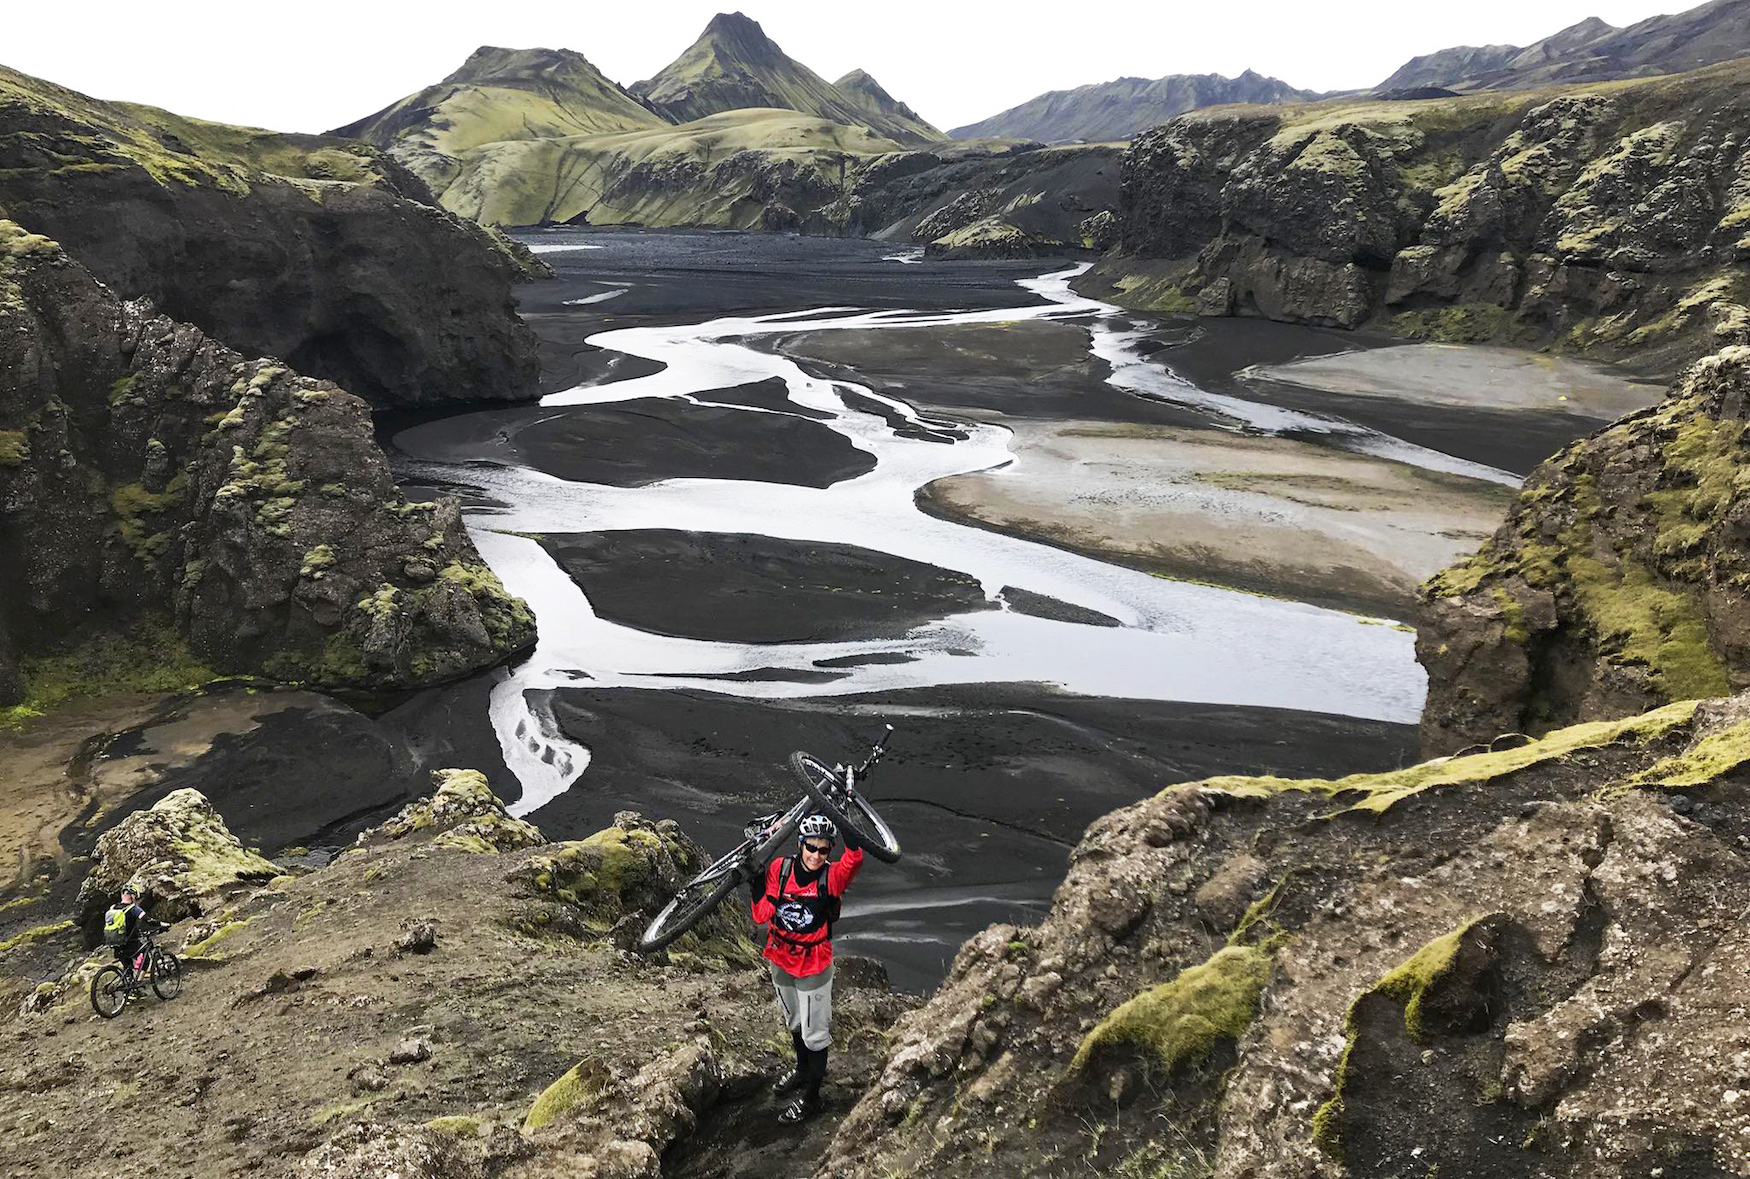 Sharon Henry, MHS teacher, carries her mountain bike uphill in Iceland.